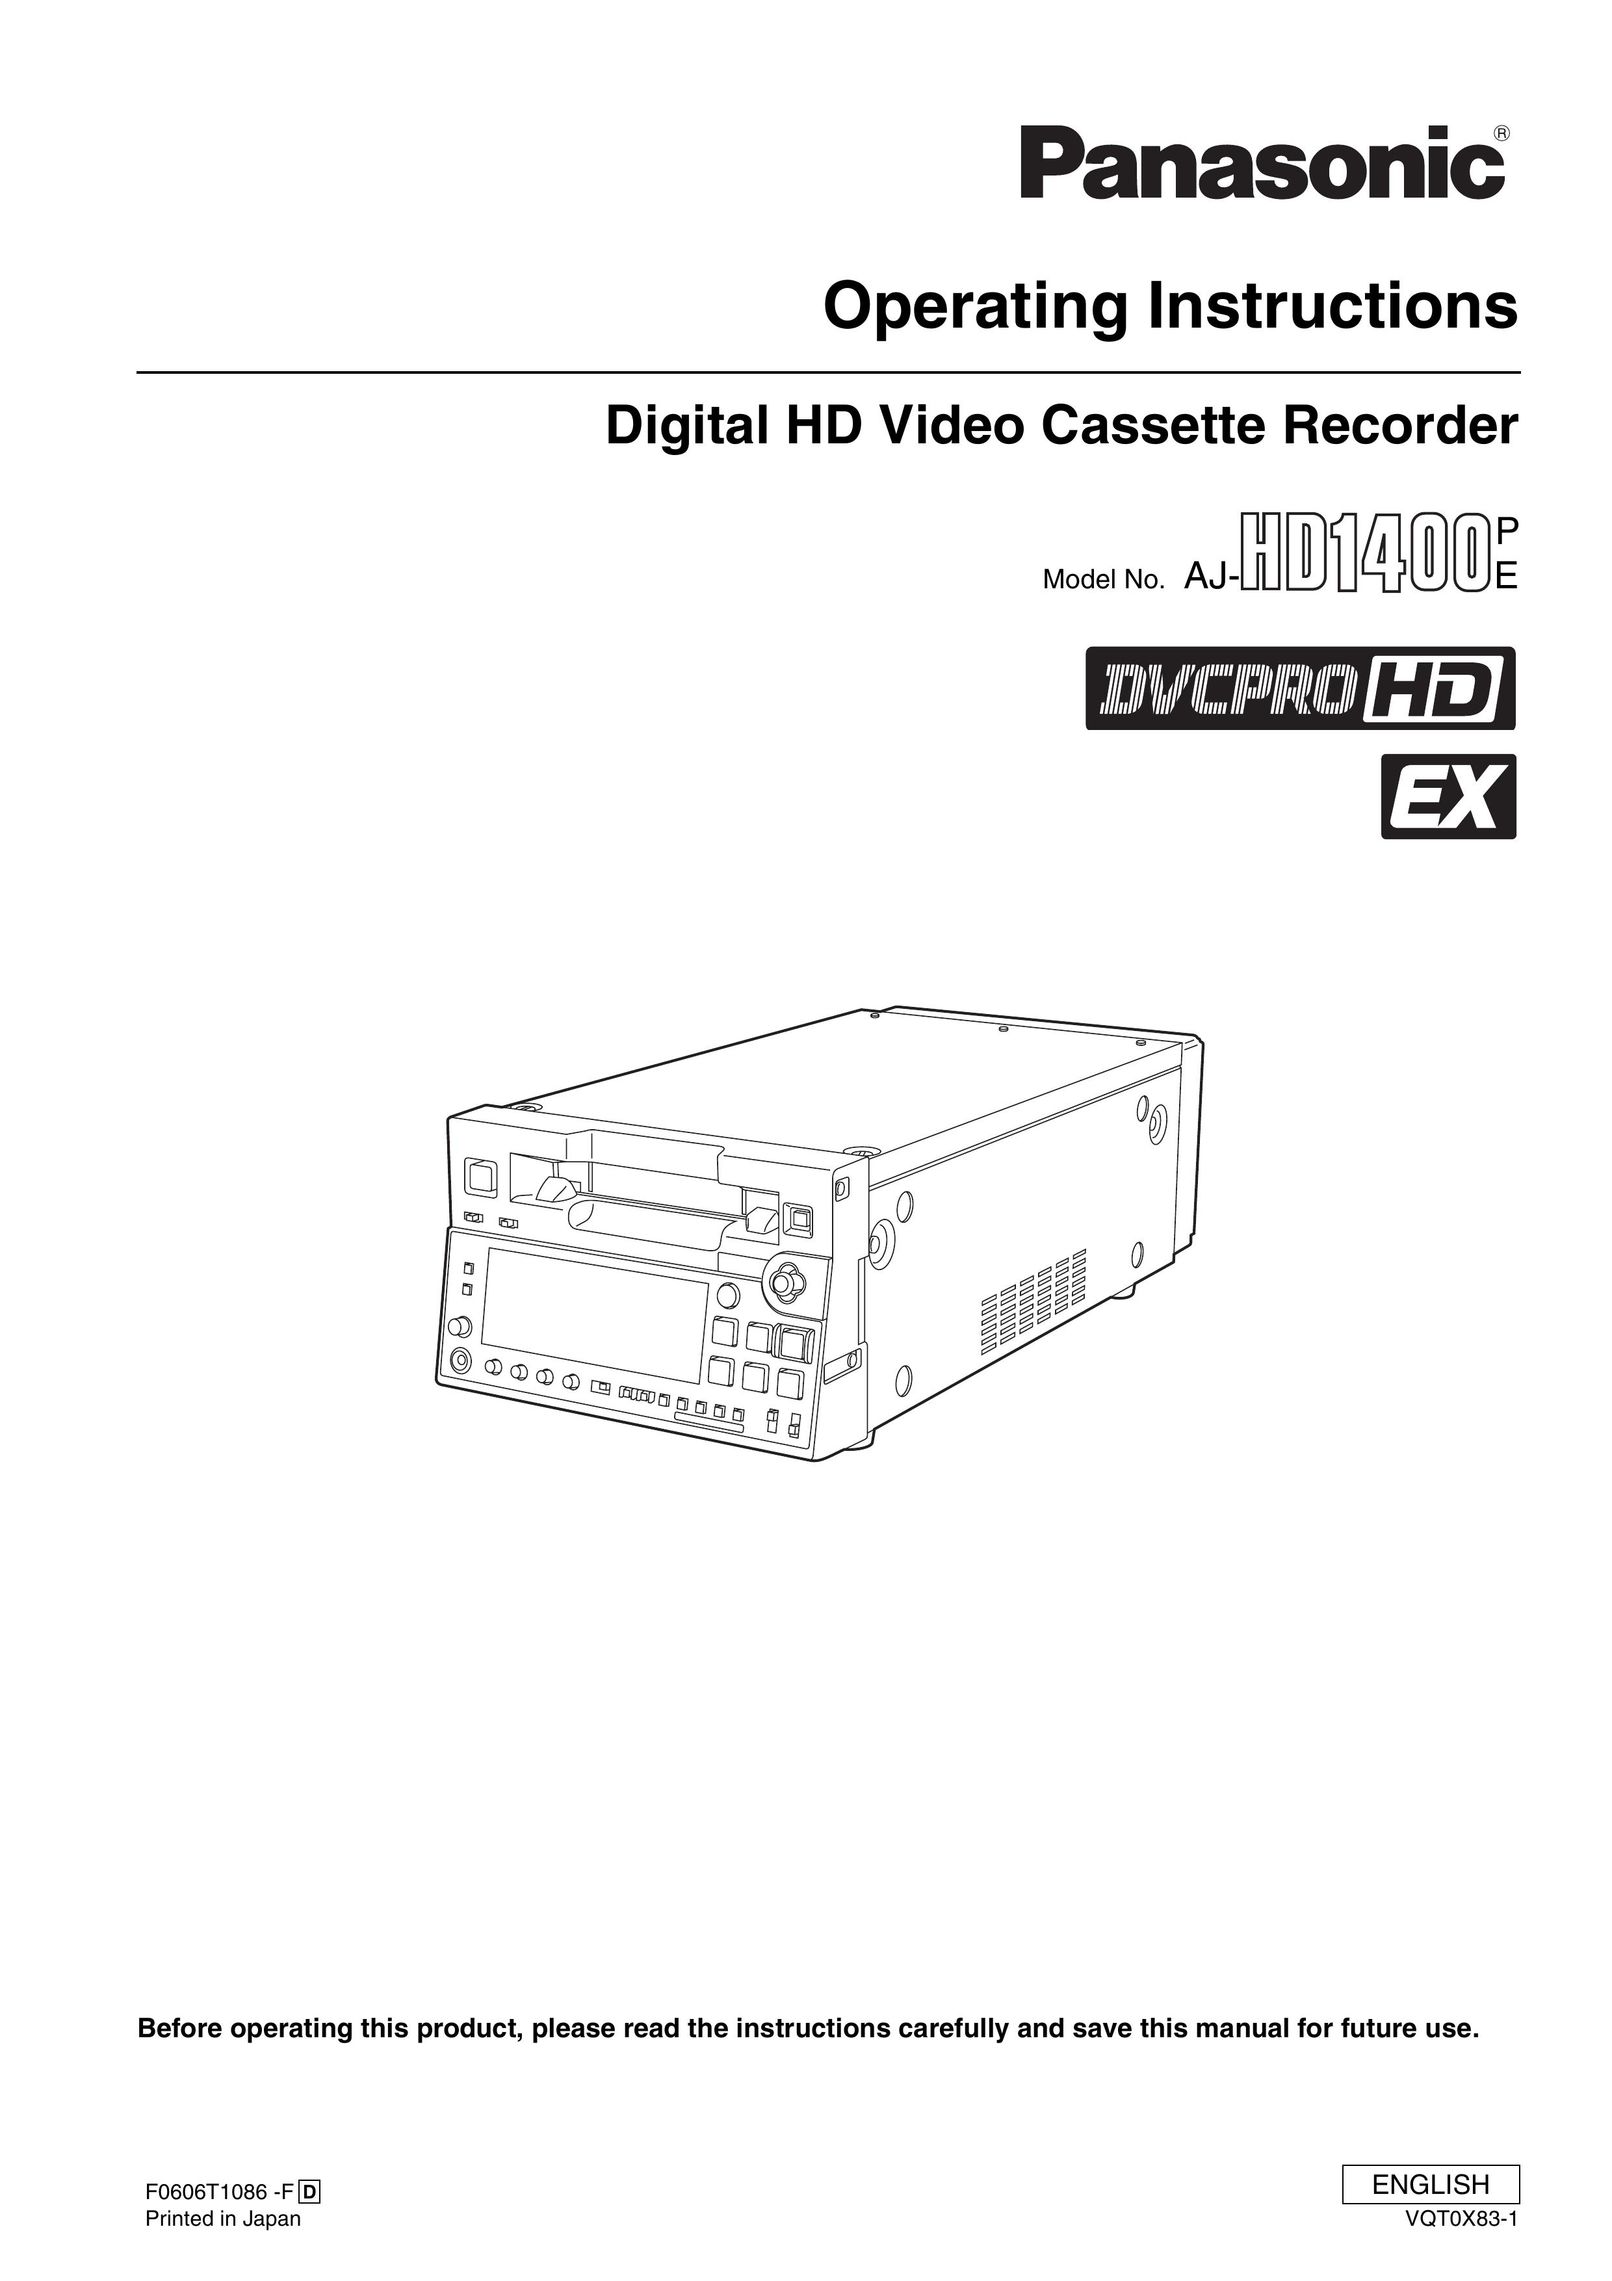 Panasonic AJ-HD1400E VCR User Manual